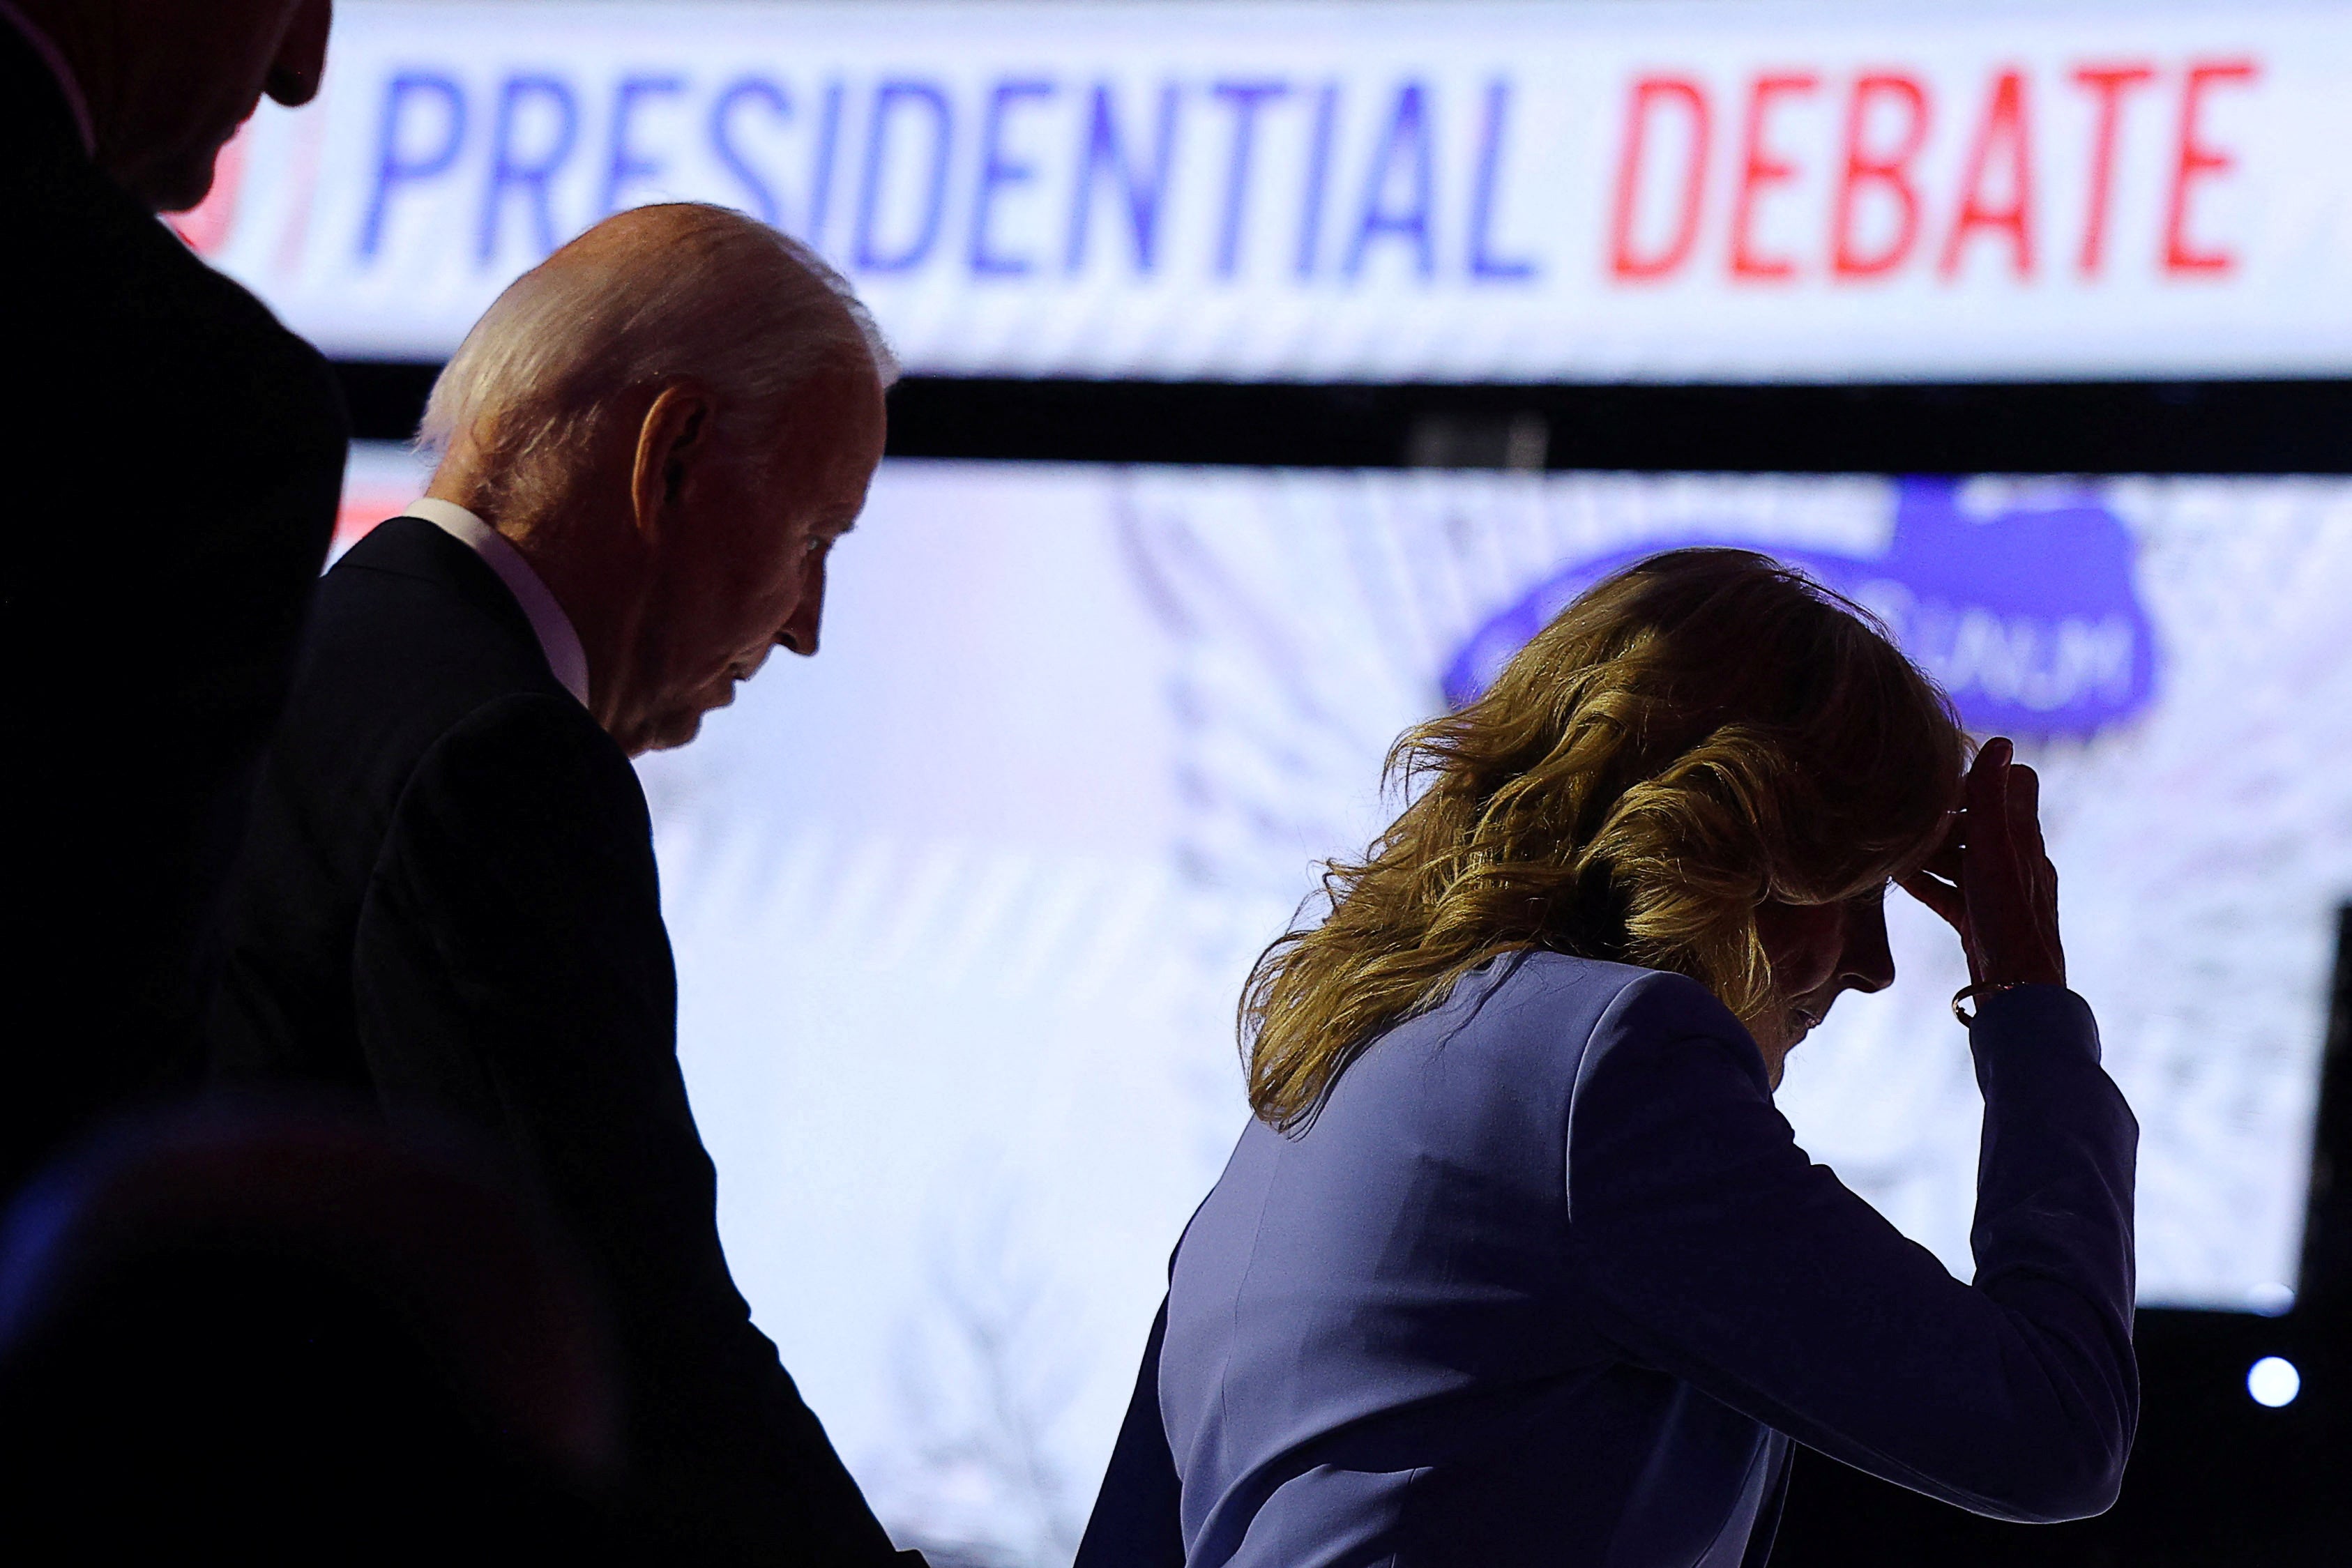 Joe Biden and First Lady Jill Biden leave the CNN presidential debate stage on June 27